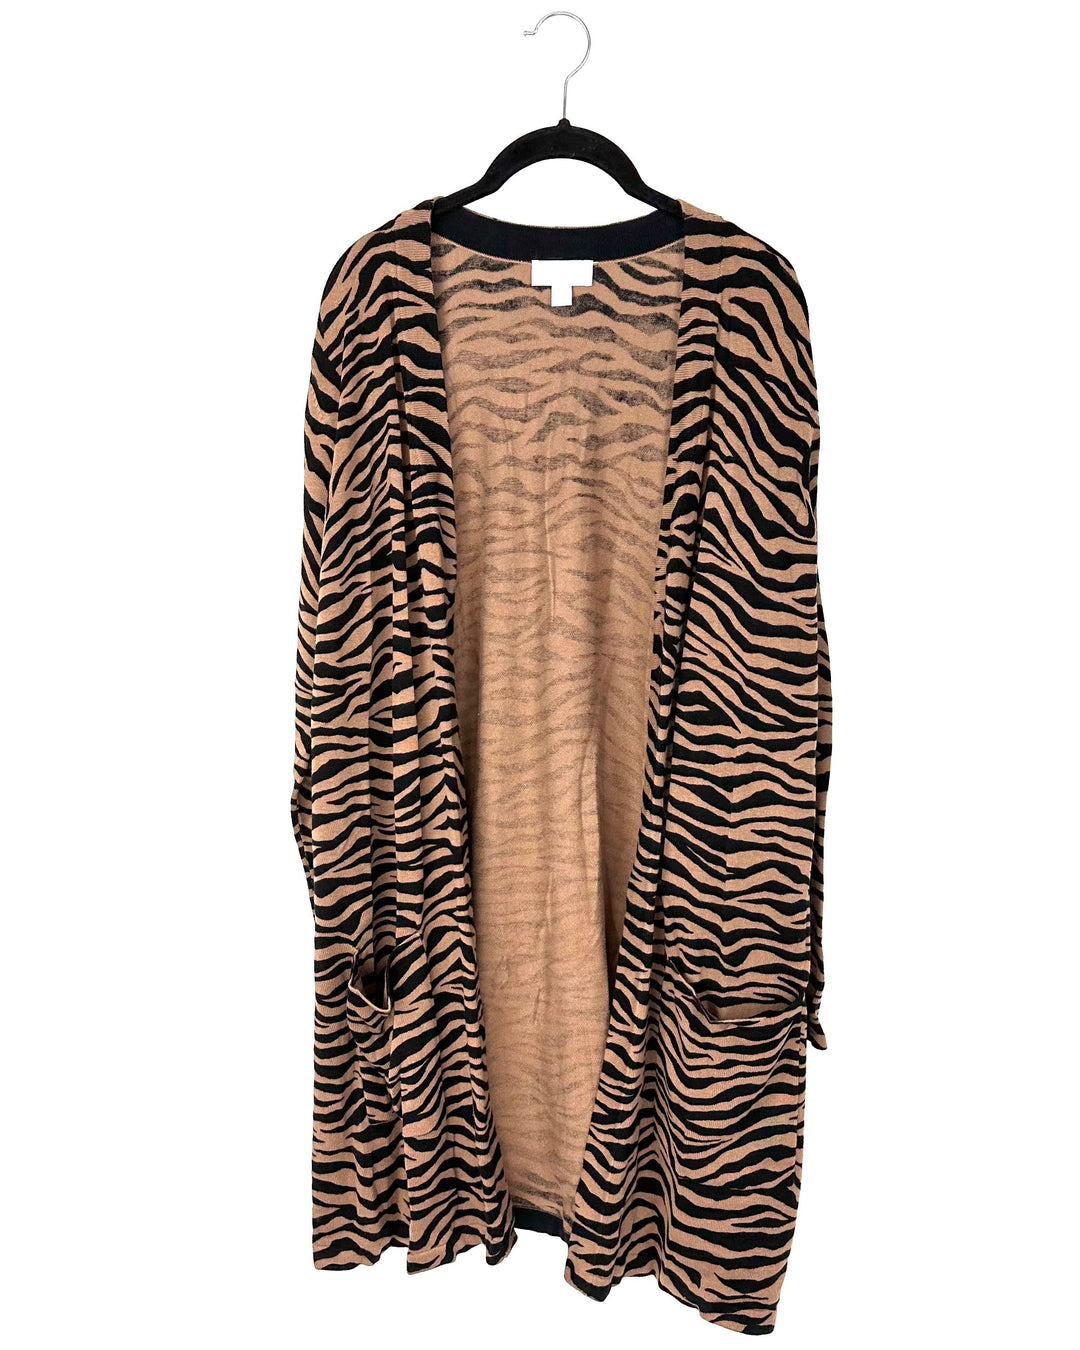 Tiger Print Cardigan Sweater - Size 14-16